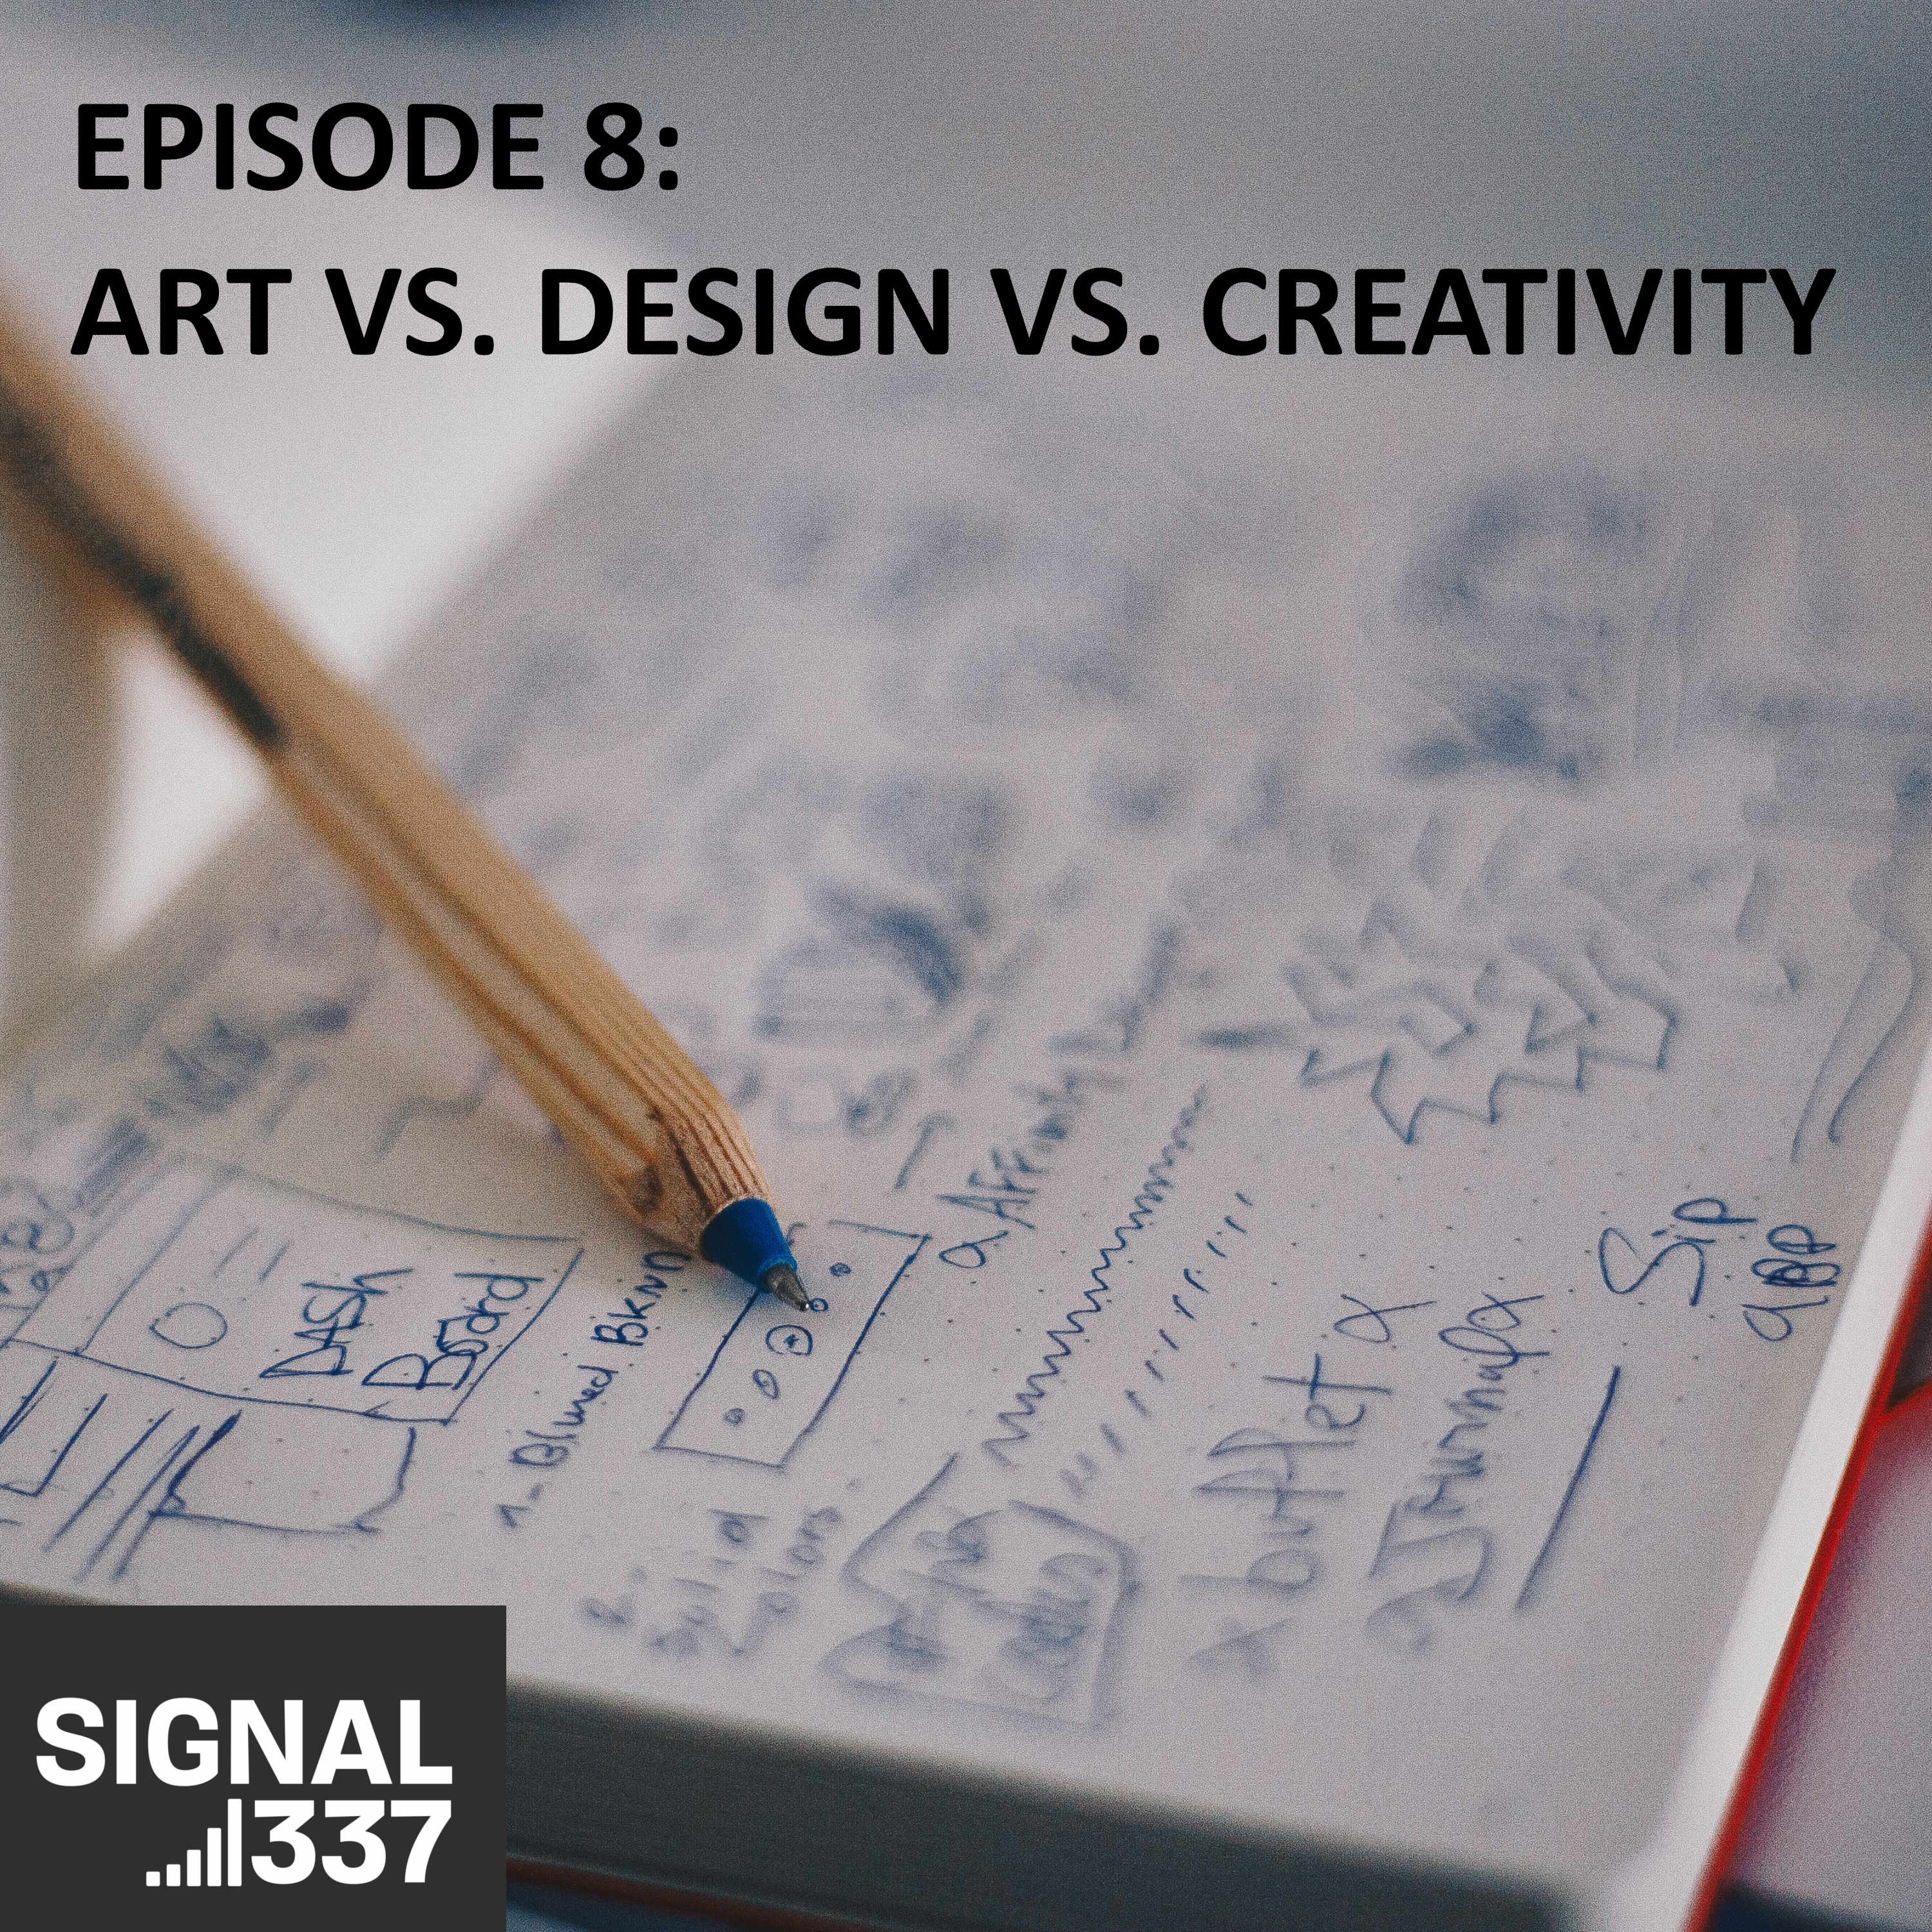 Art vs. Design vs. Creativity